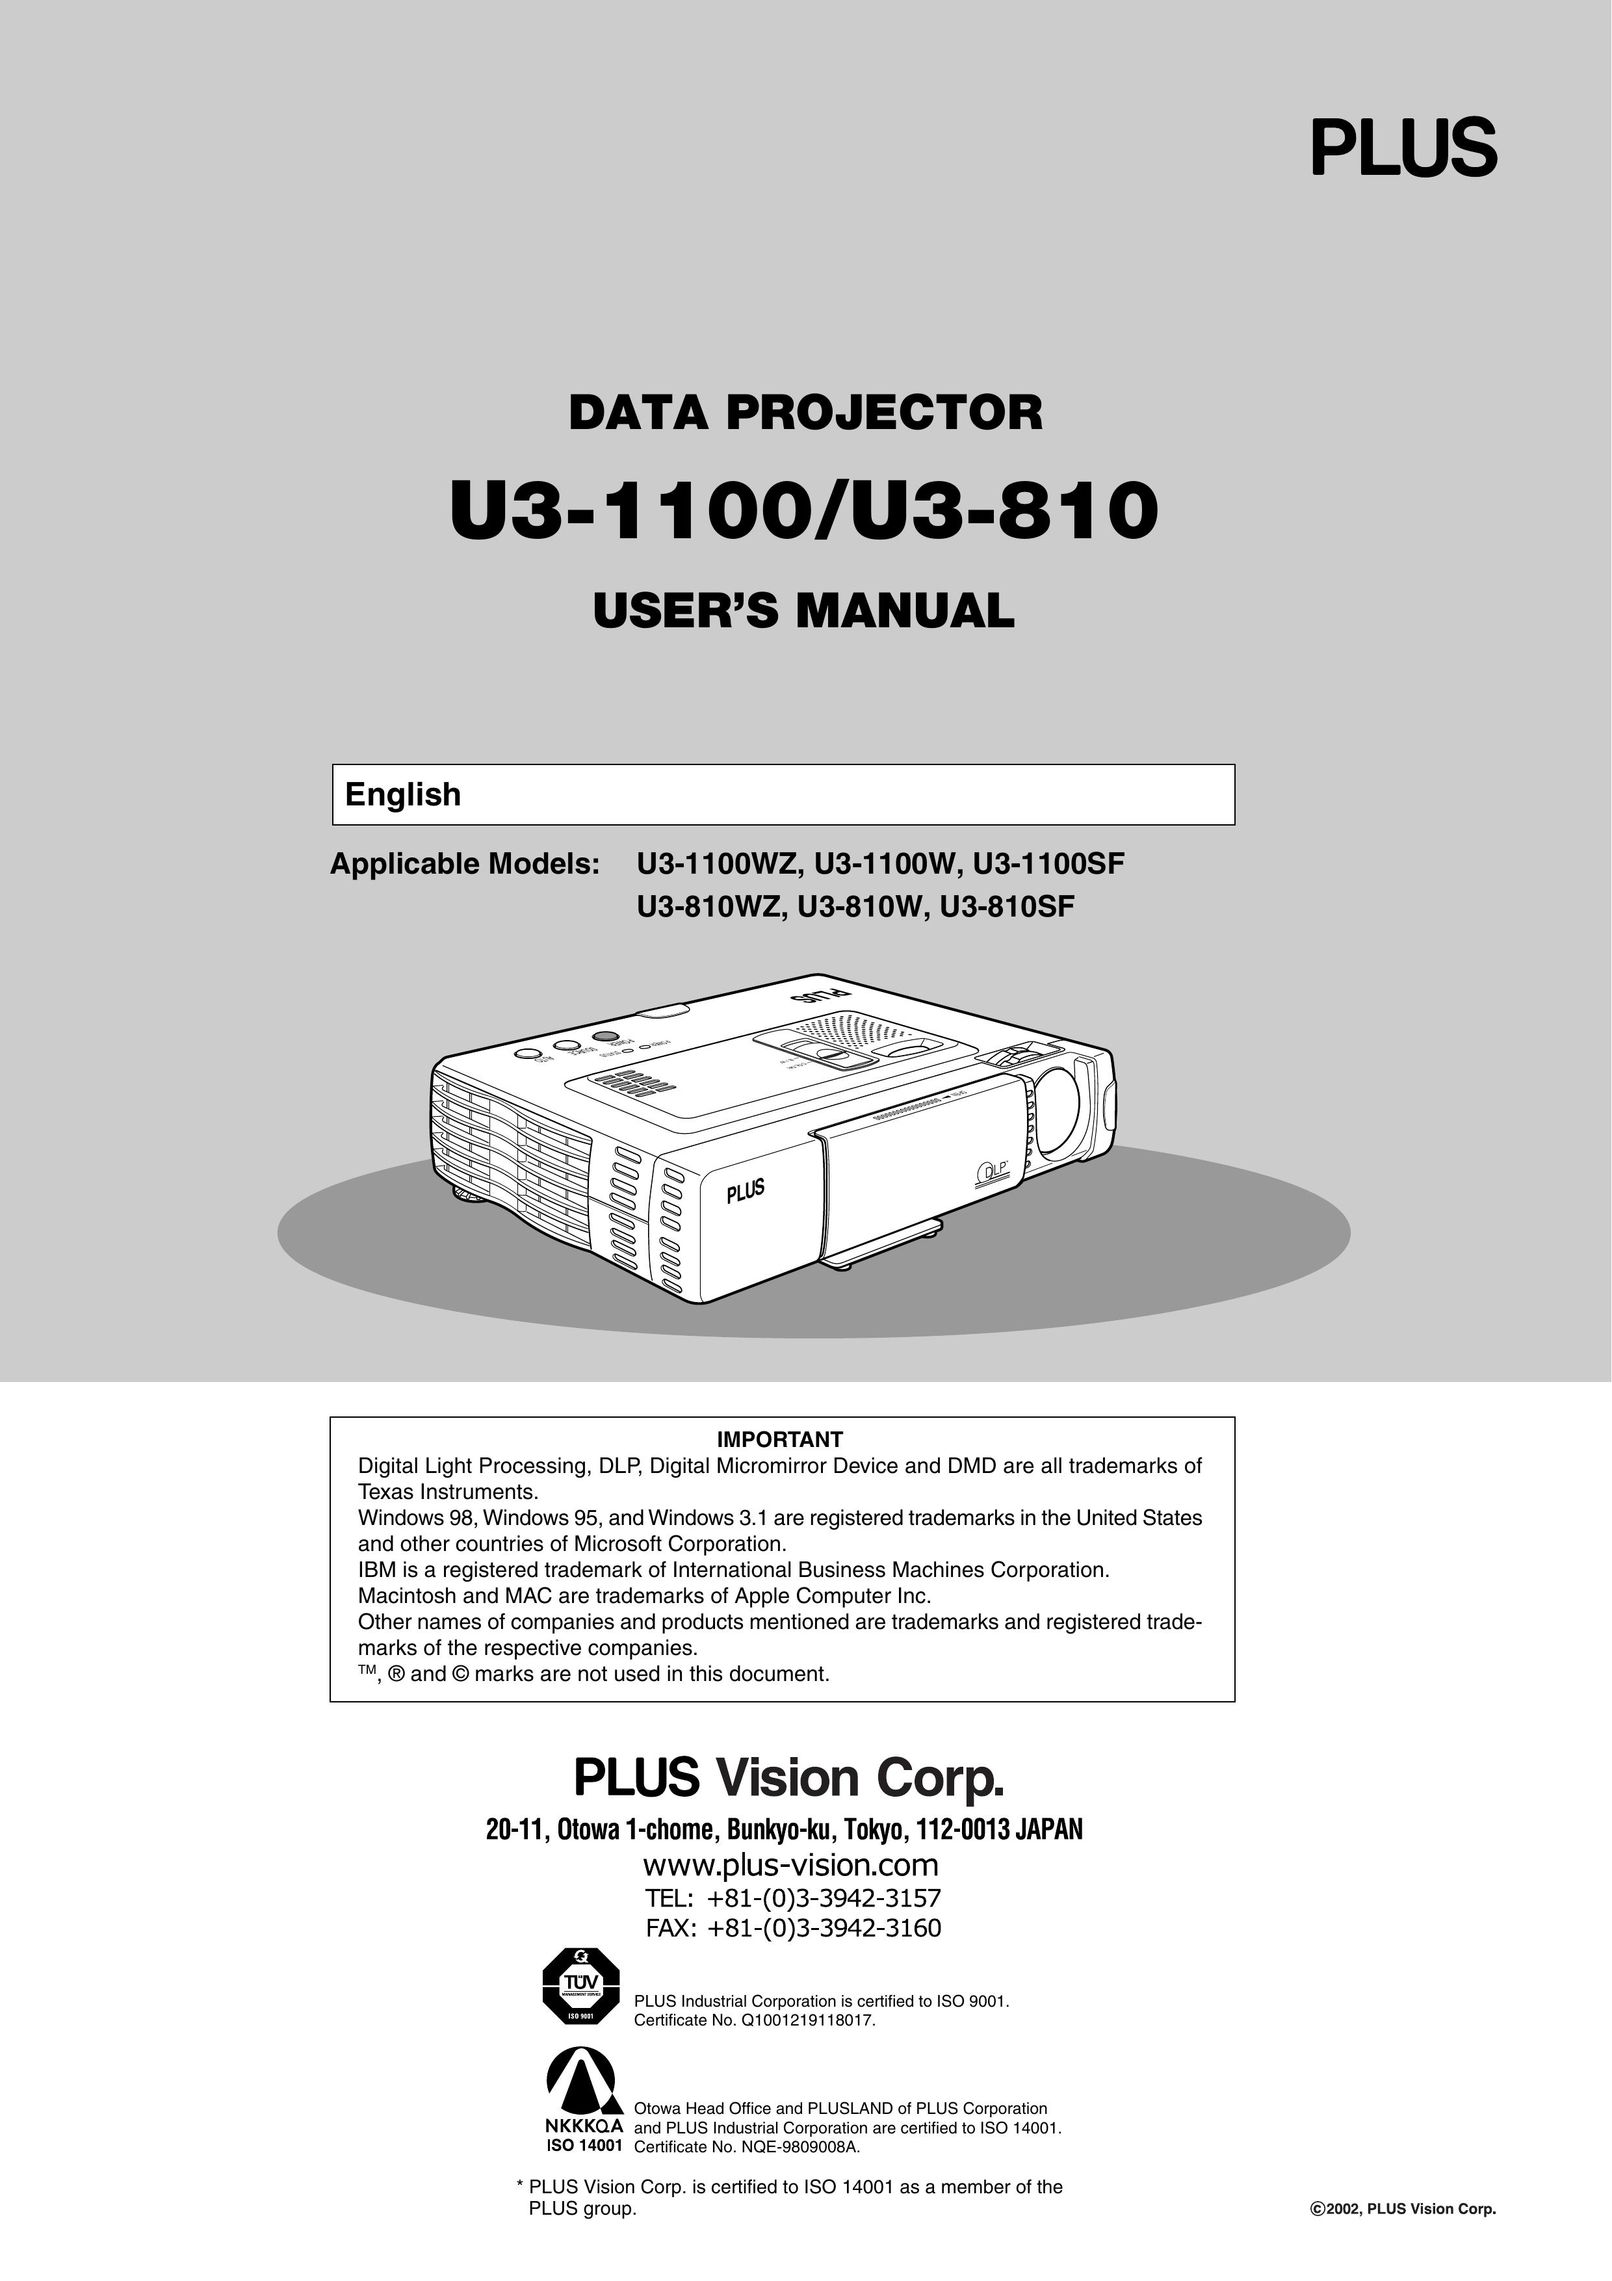 PLUS Vision U3-810 Projector User Manual